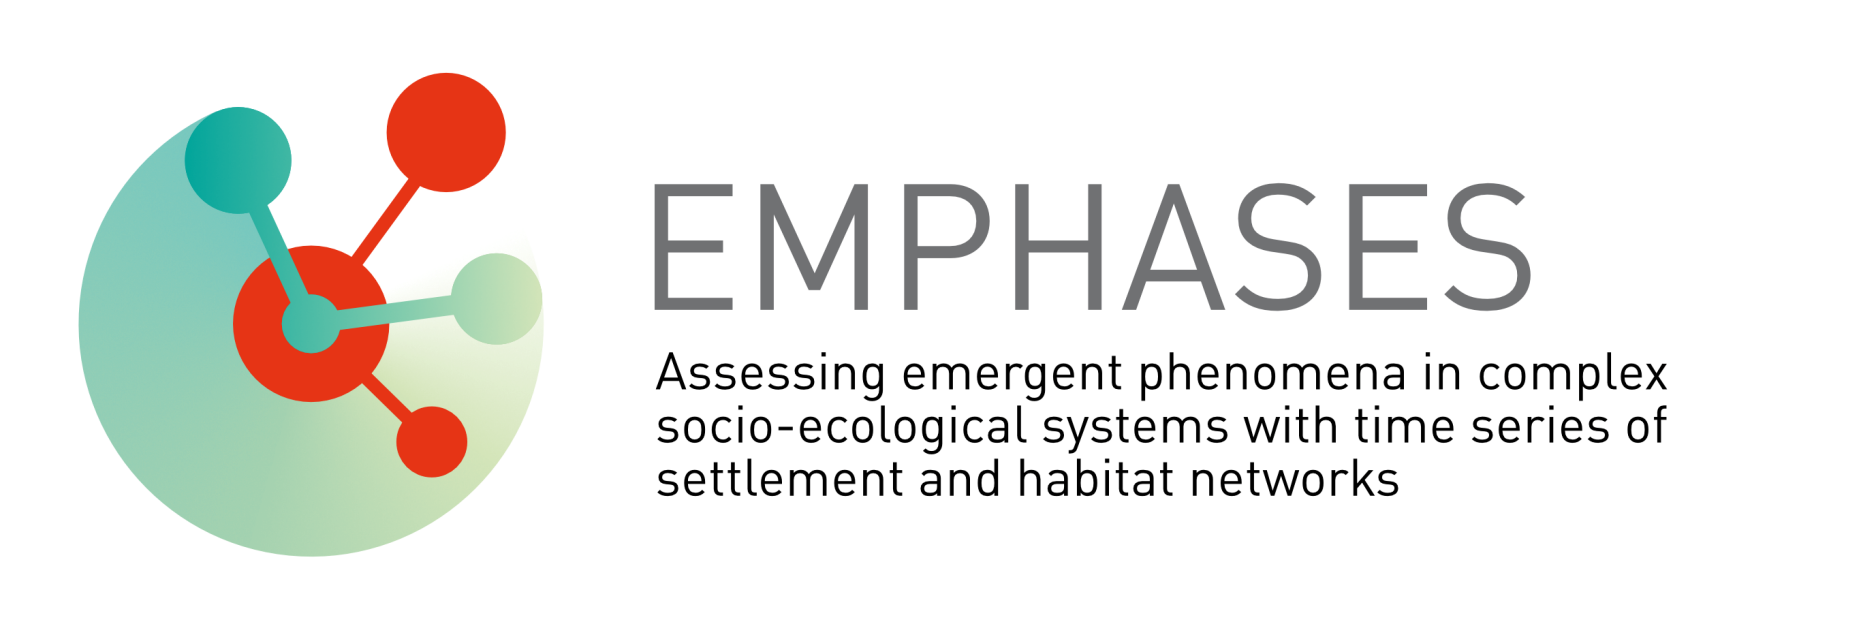 EMPHASES logo